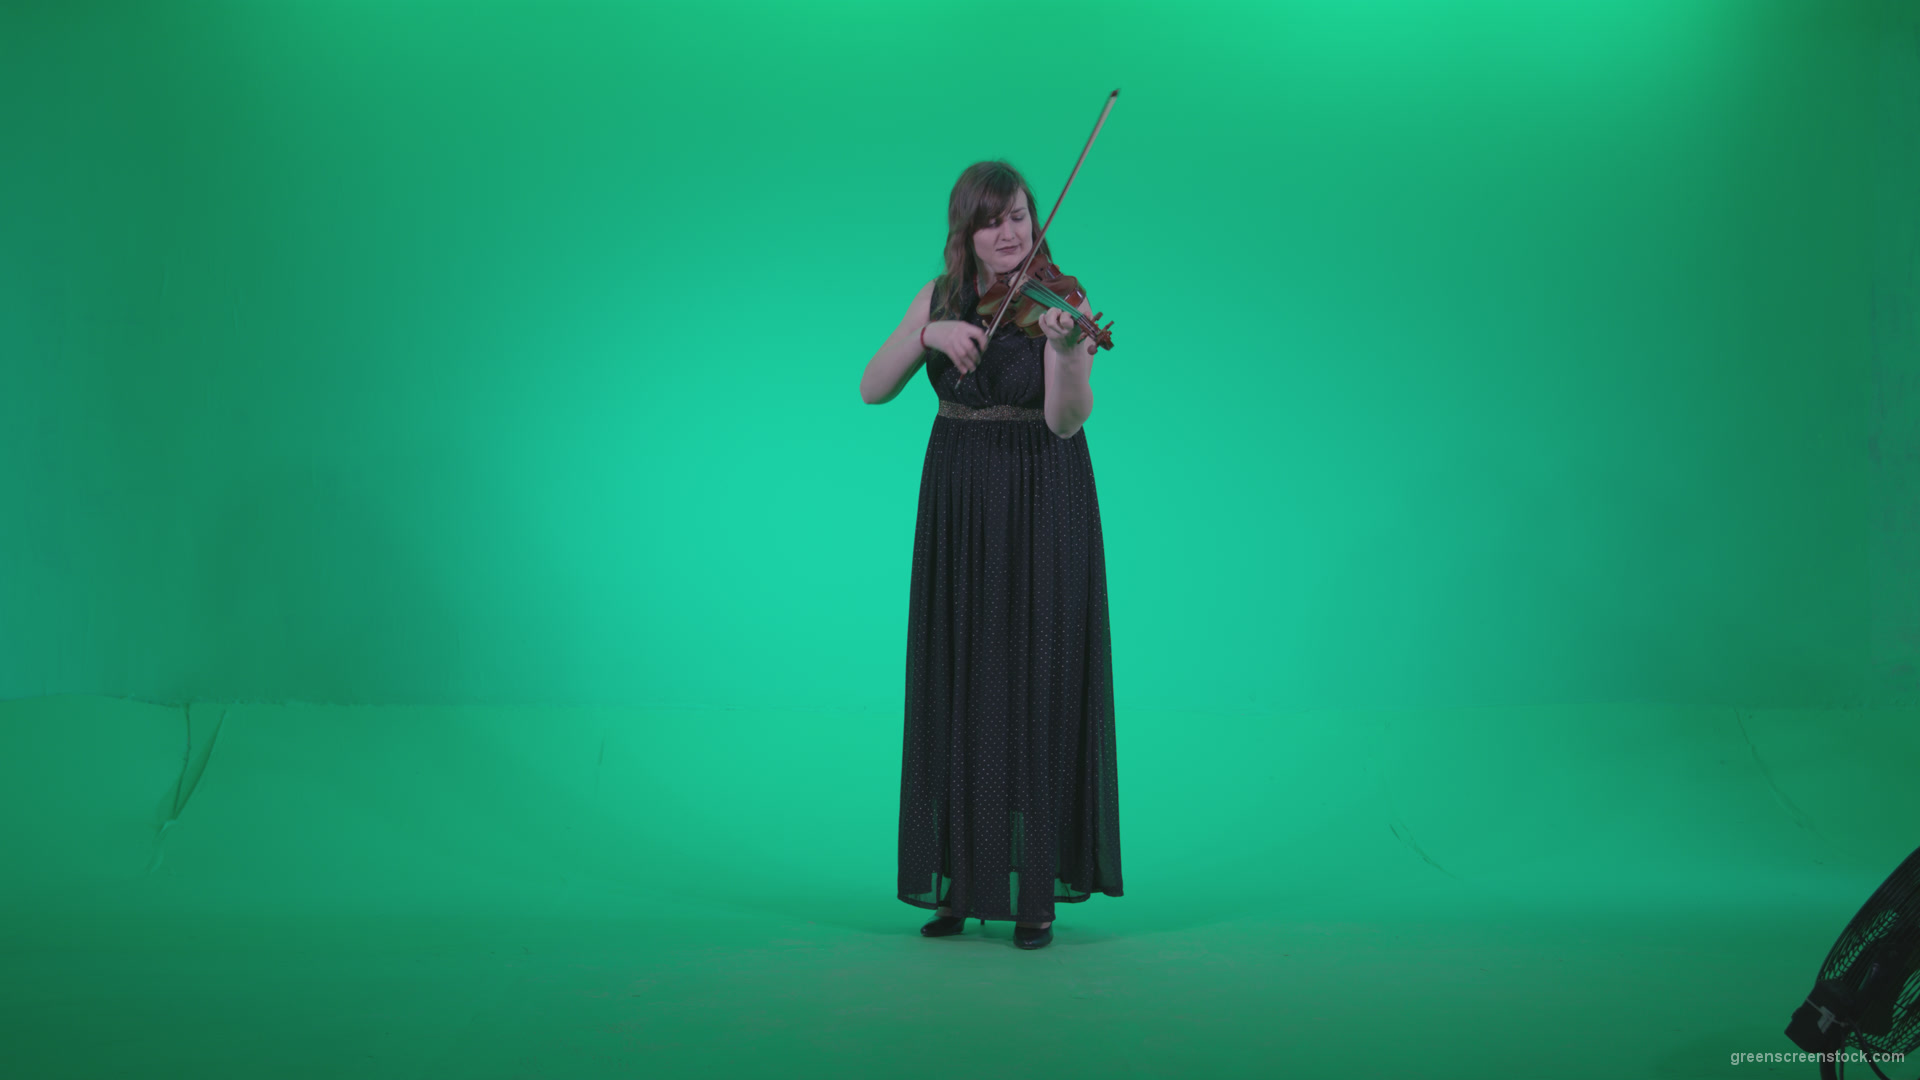 Professional-Violin-player-woman-z1_005 Green Screen Stock